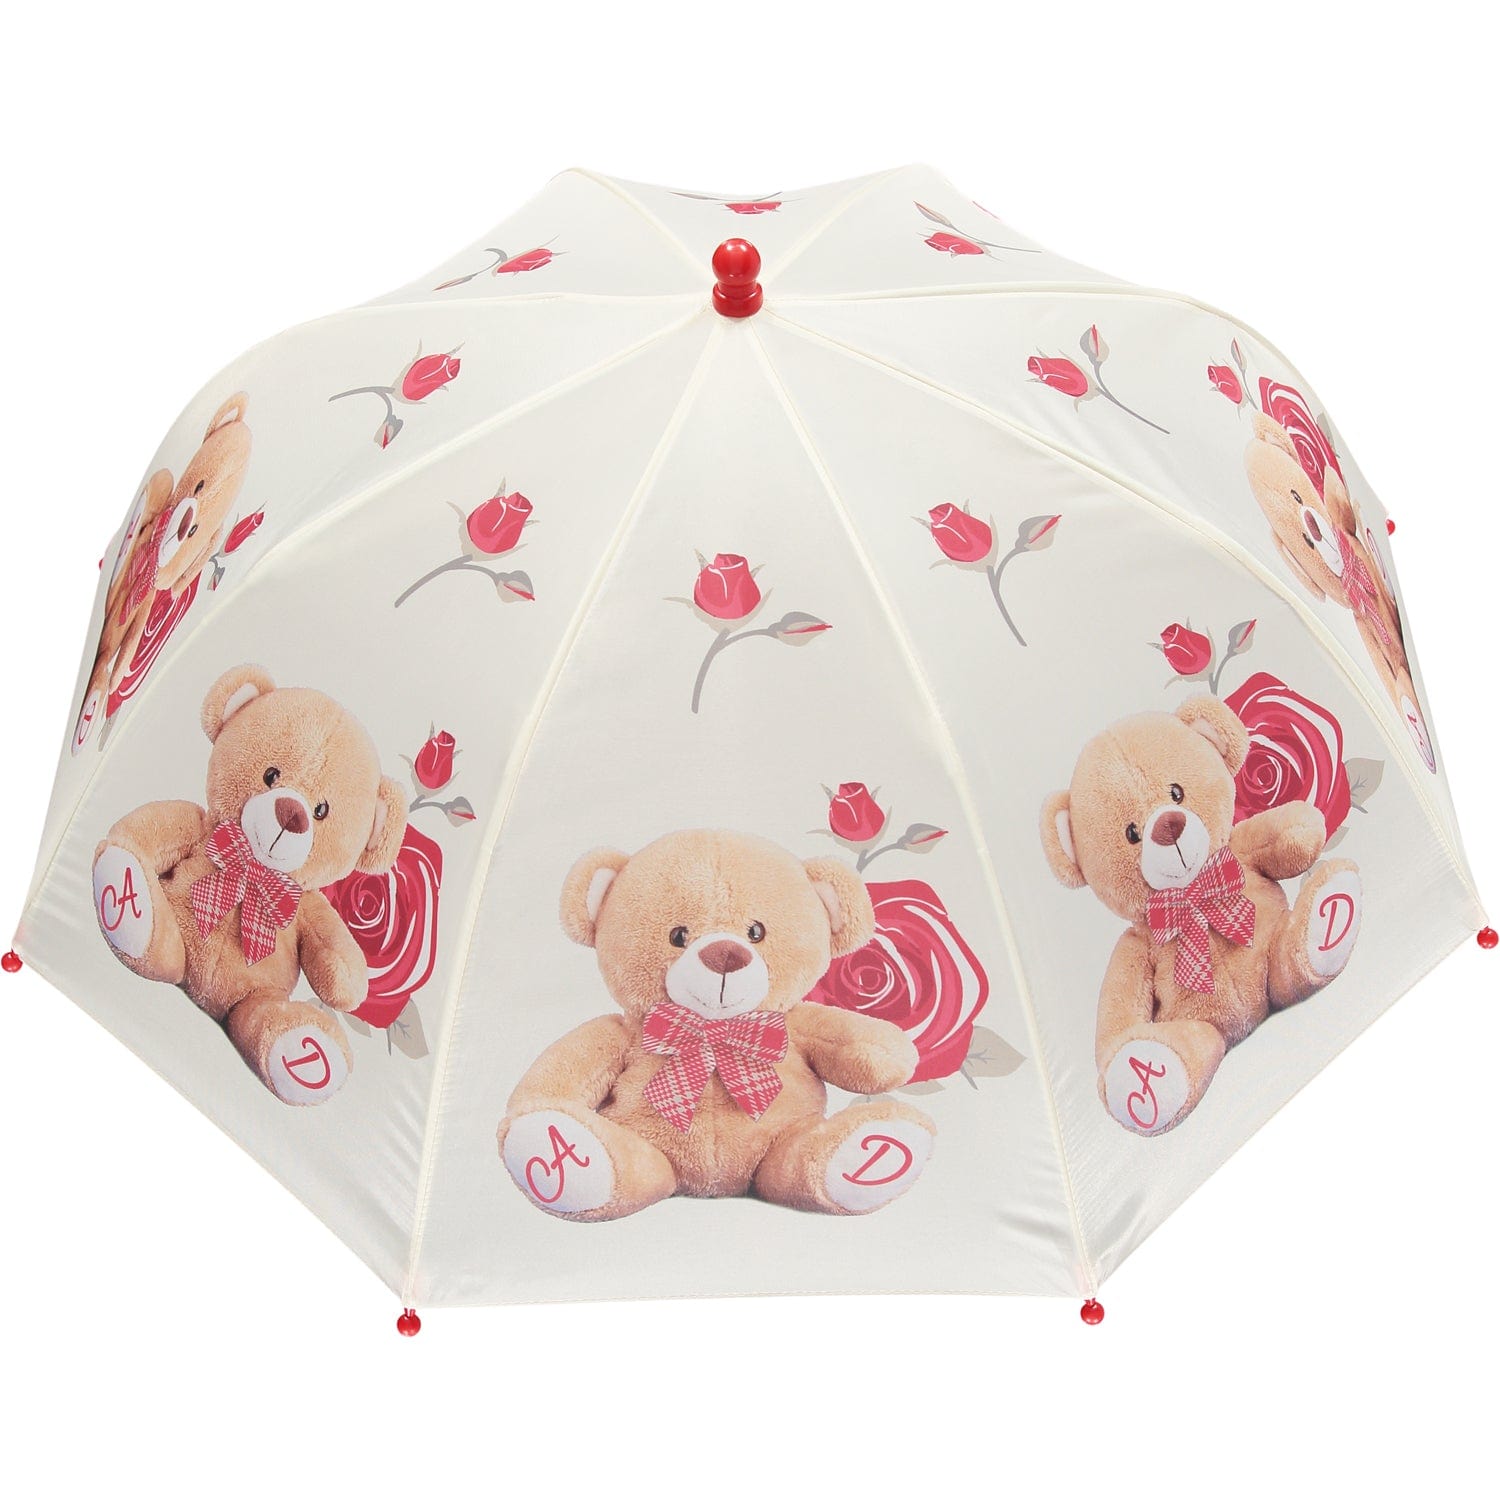 A DEE - Brolly Teddy Print Umbrella - Cream